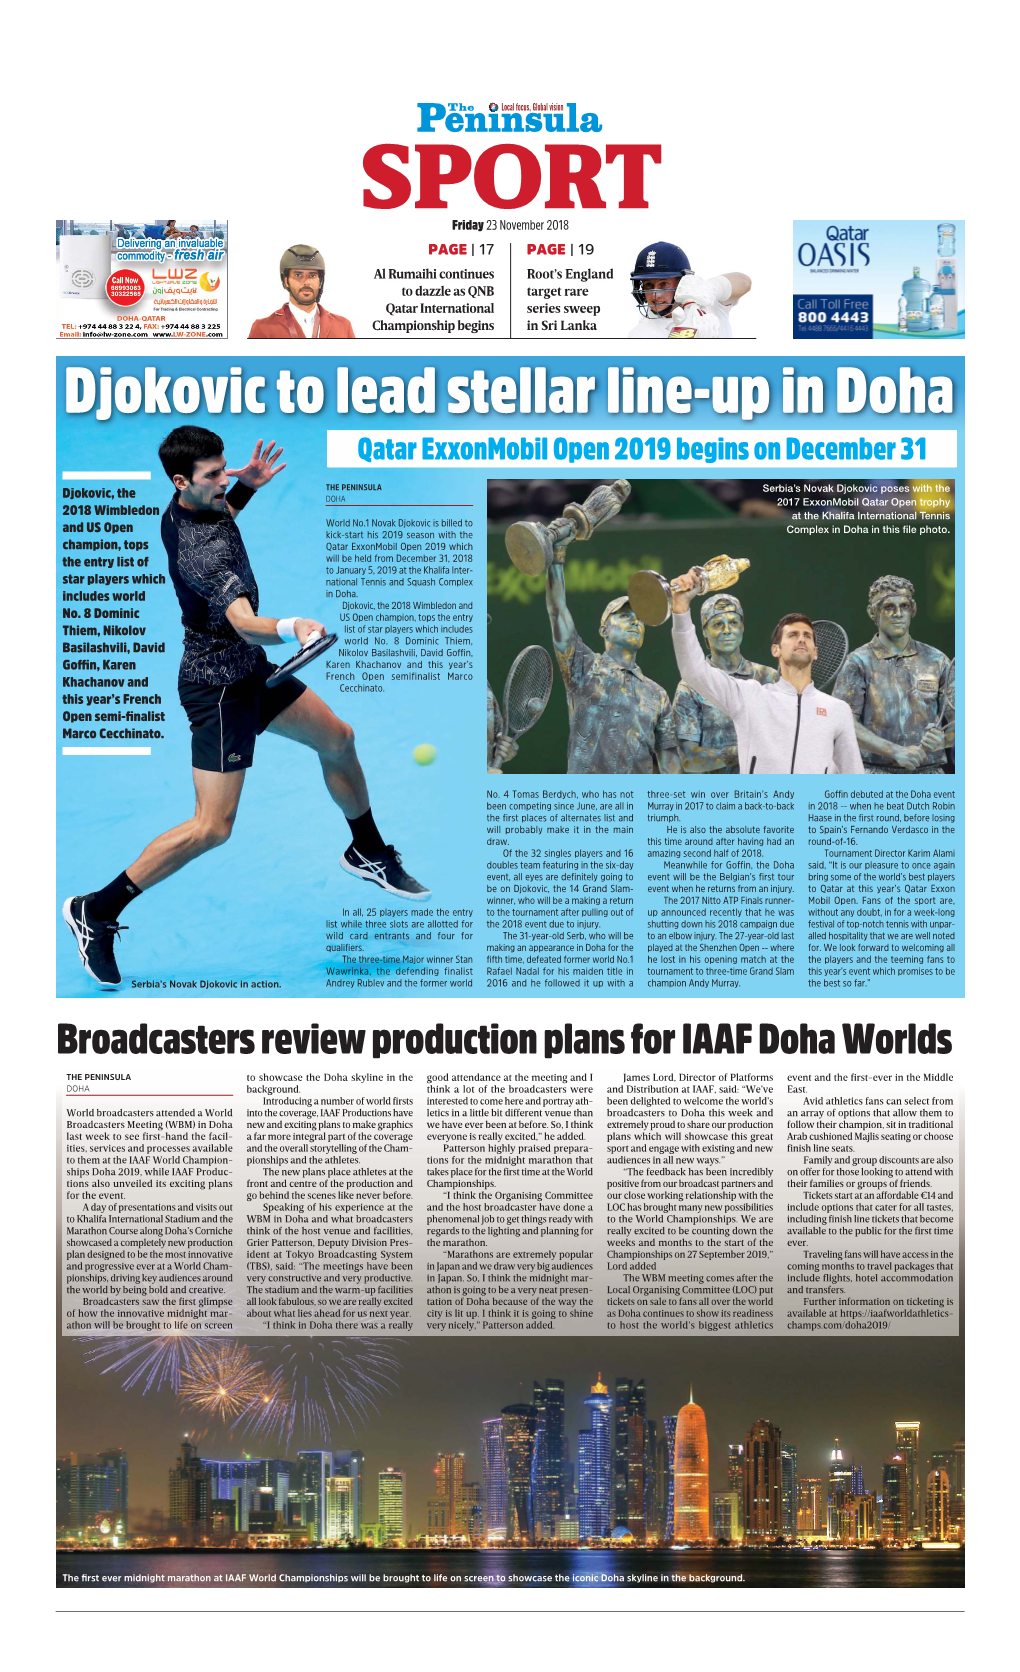 Djokovic to Lead Stellar Line-Up in Doha Qatar Exxonmobil Open 2019 Begins on December 31